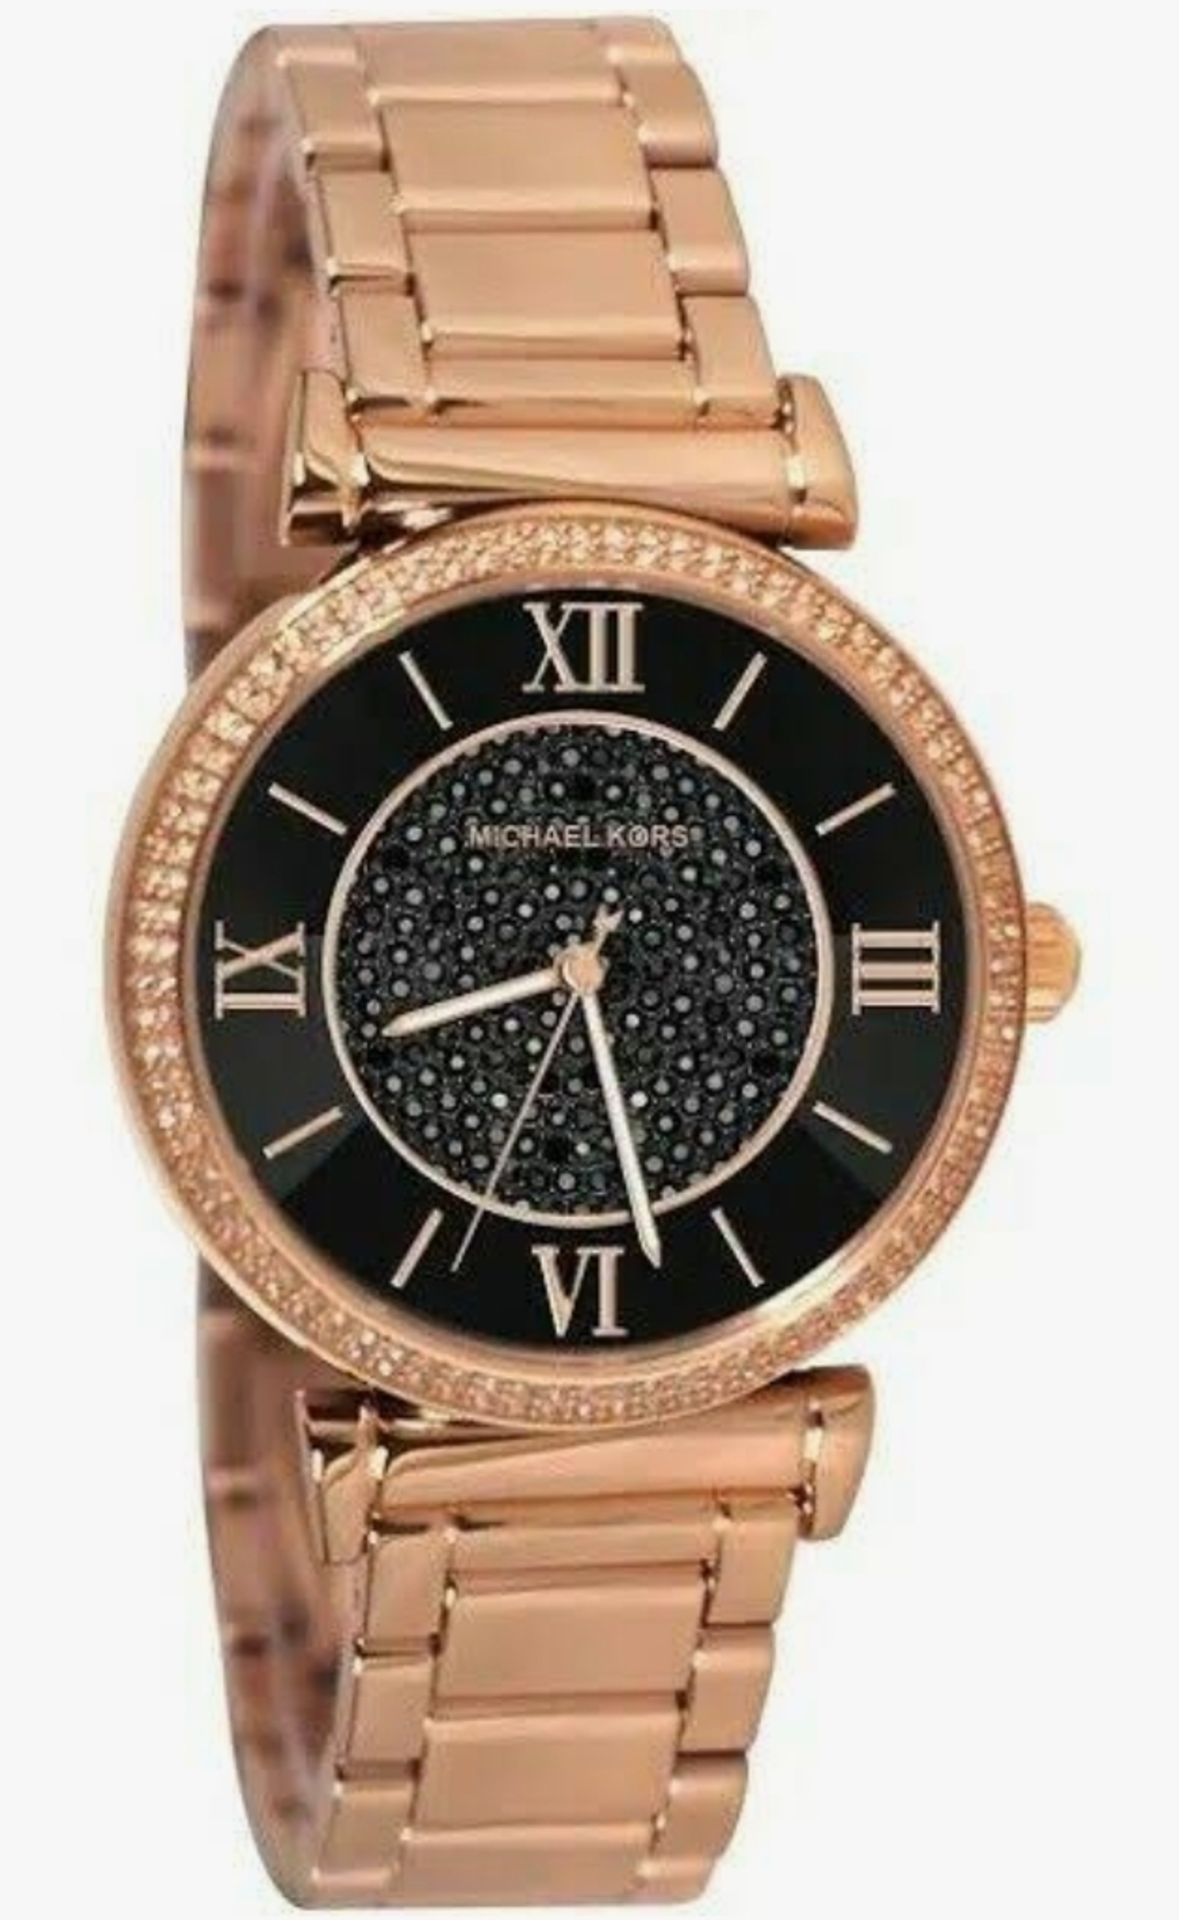 Michael Kors MK3356 Ladies Catlin Rose Gold Quartz Watch - Image 5 of 6